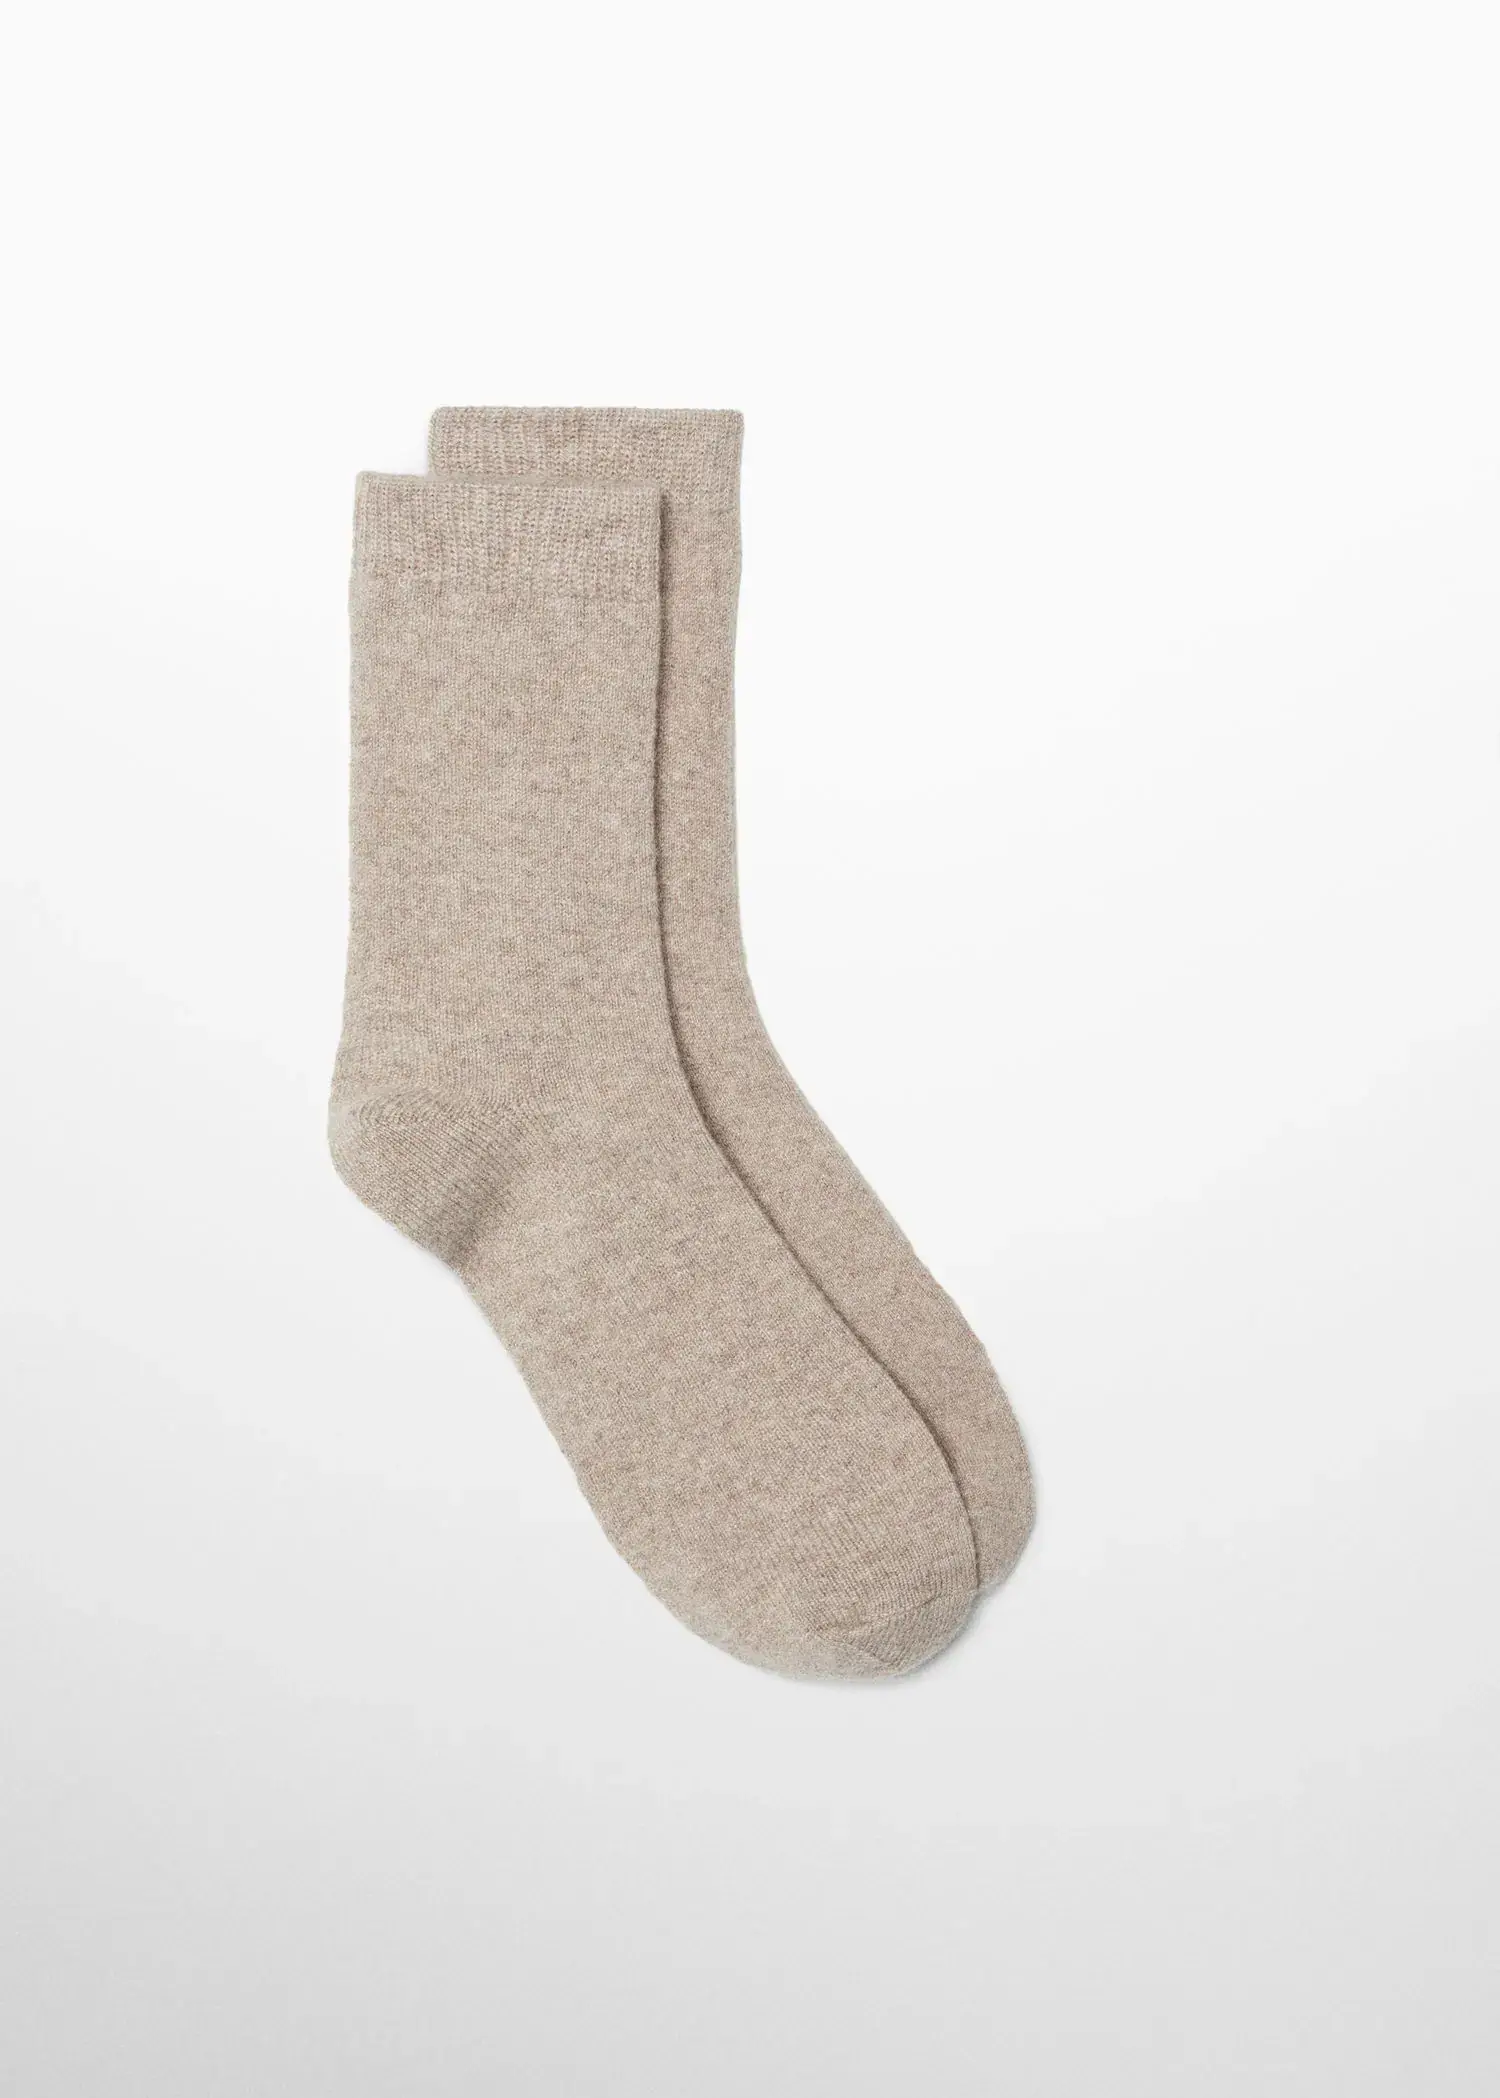 Mango Cashmere knitted socks. 2